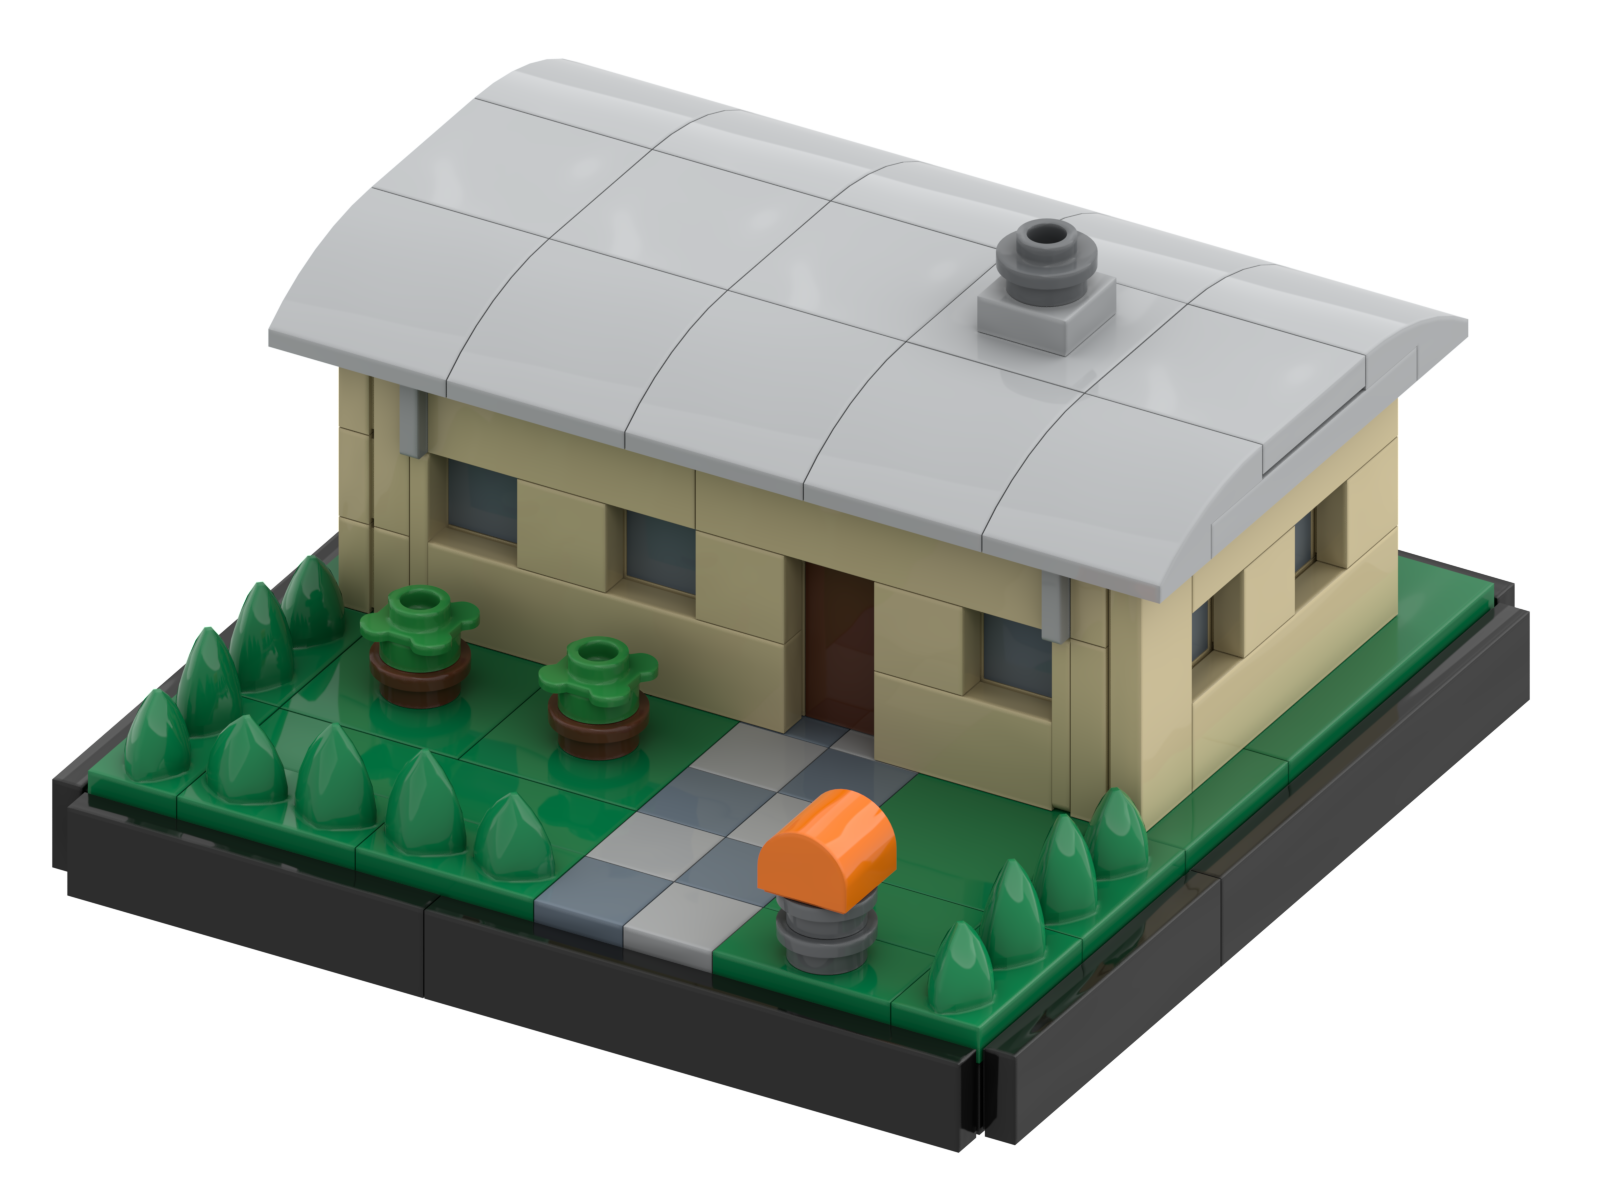 Small modern house MOC - The Model Maker